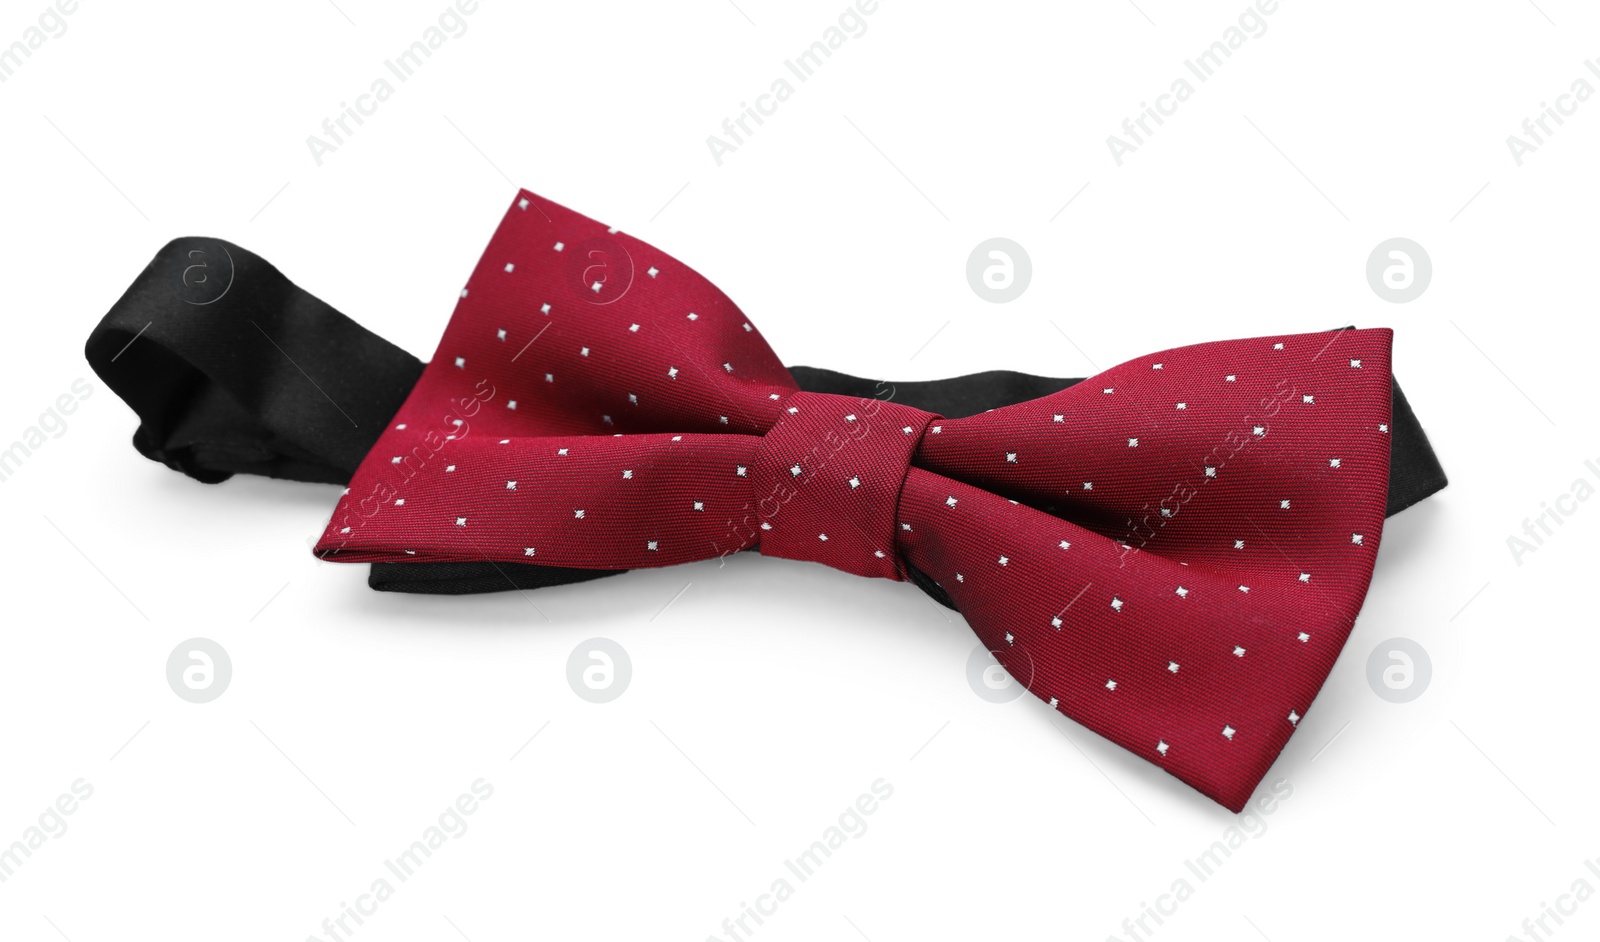 Photo of Stylish burgundy bow tie with polka dot pattern on white background